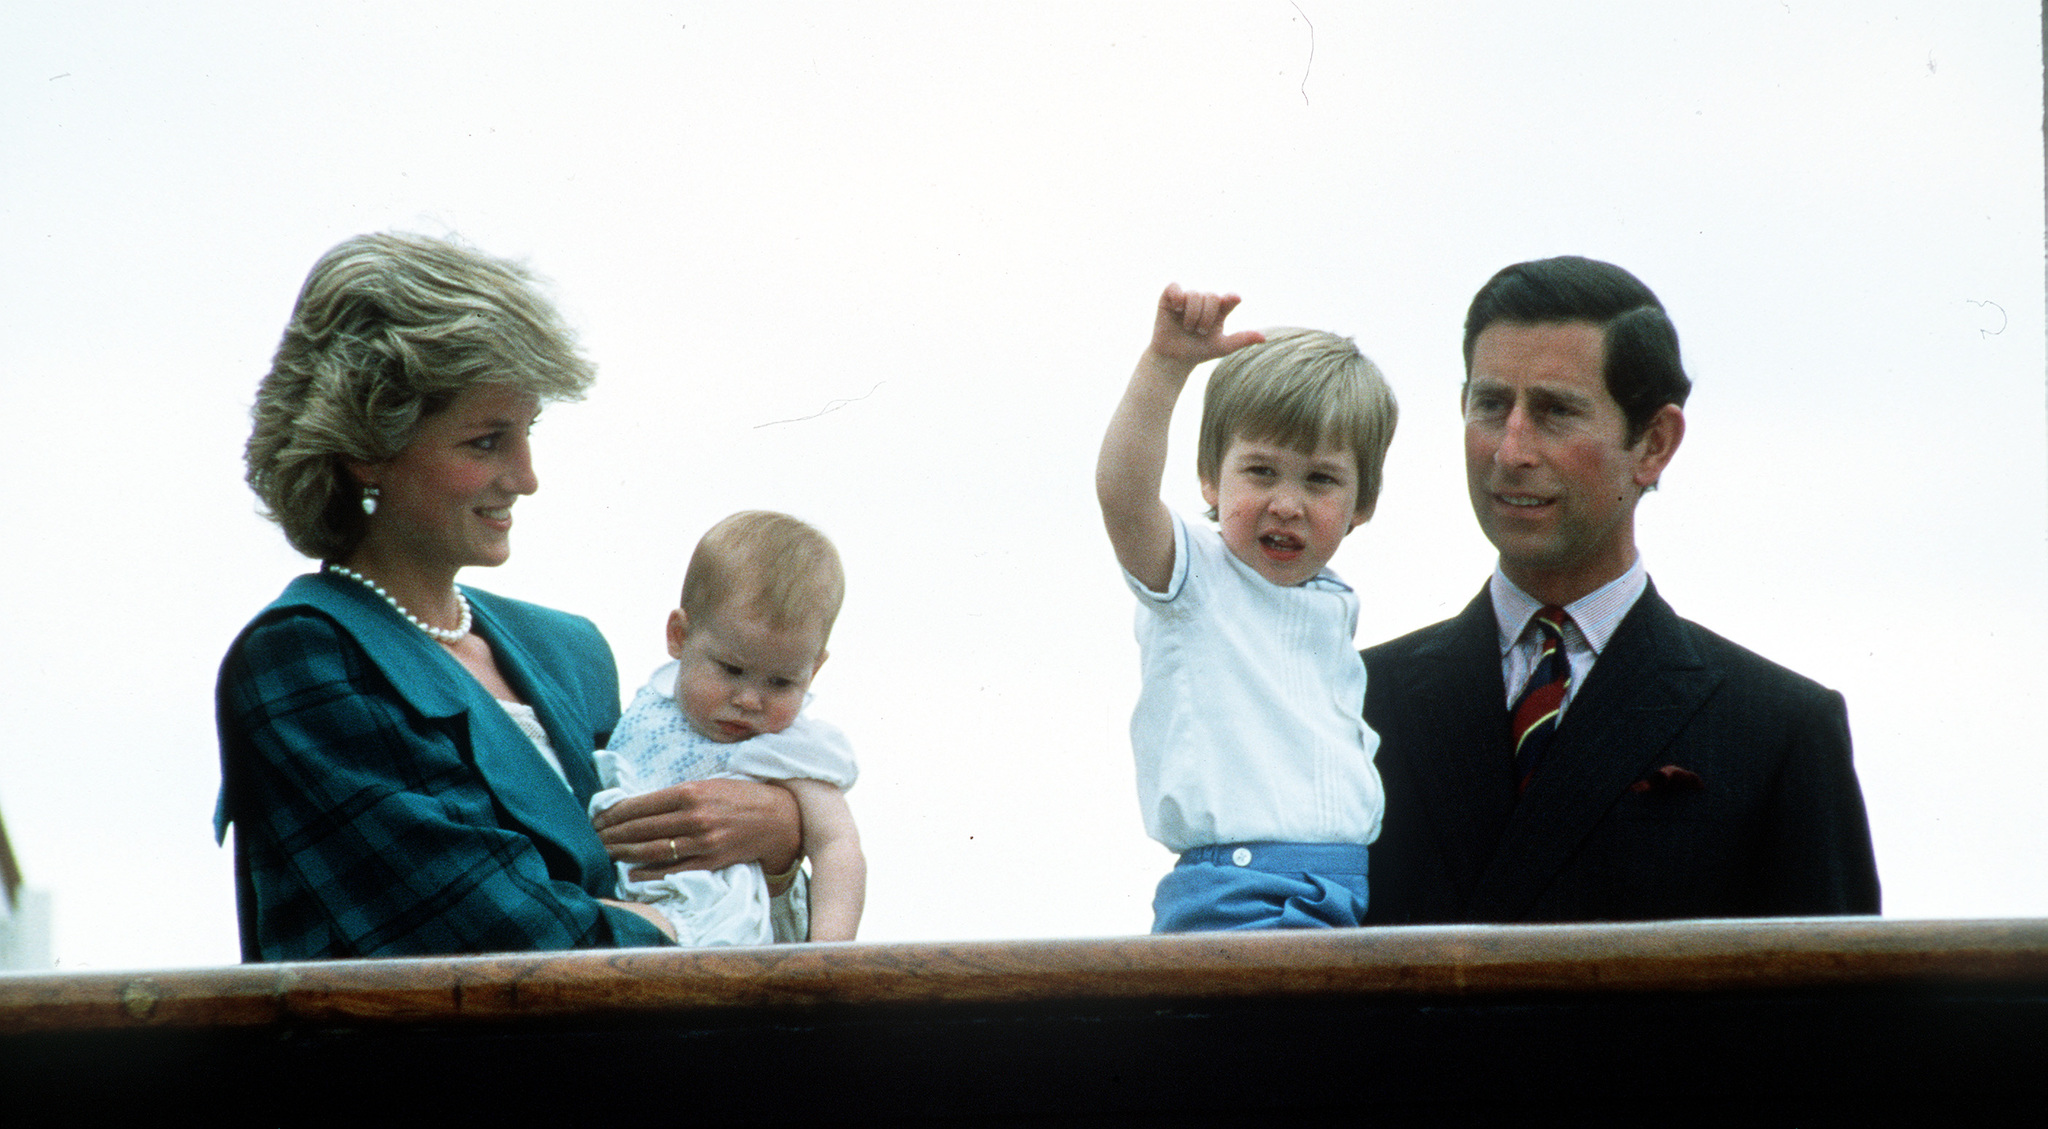 Prince Charles, Princess Diana, Prince Harry Windsor and Prince William